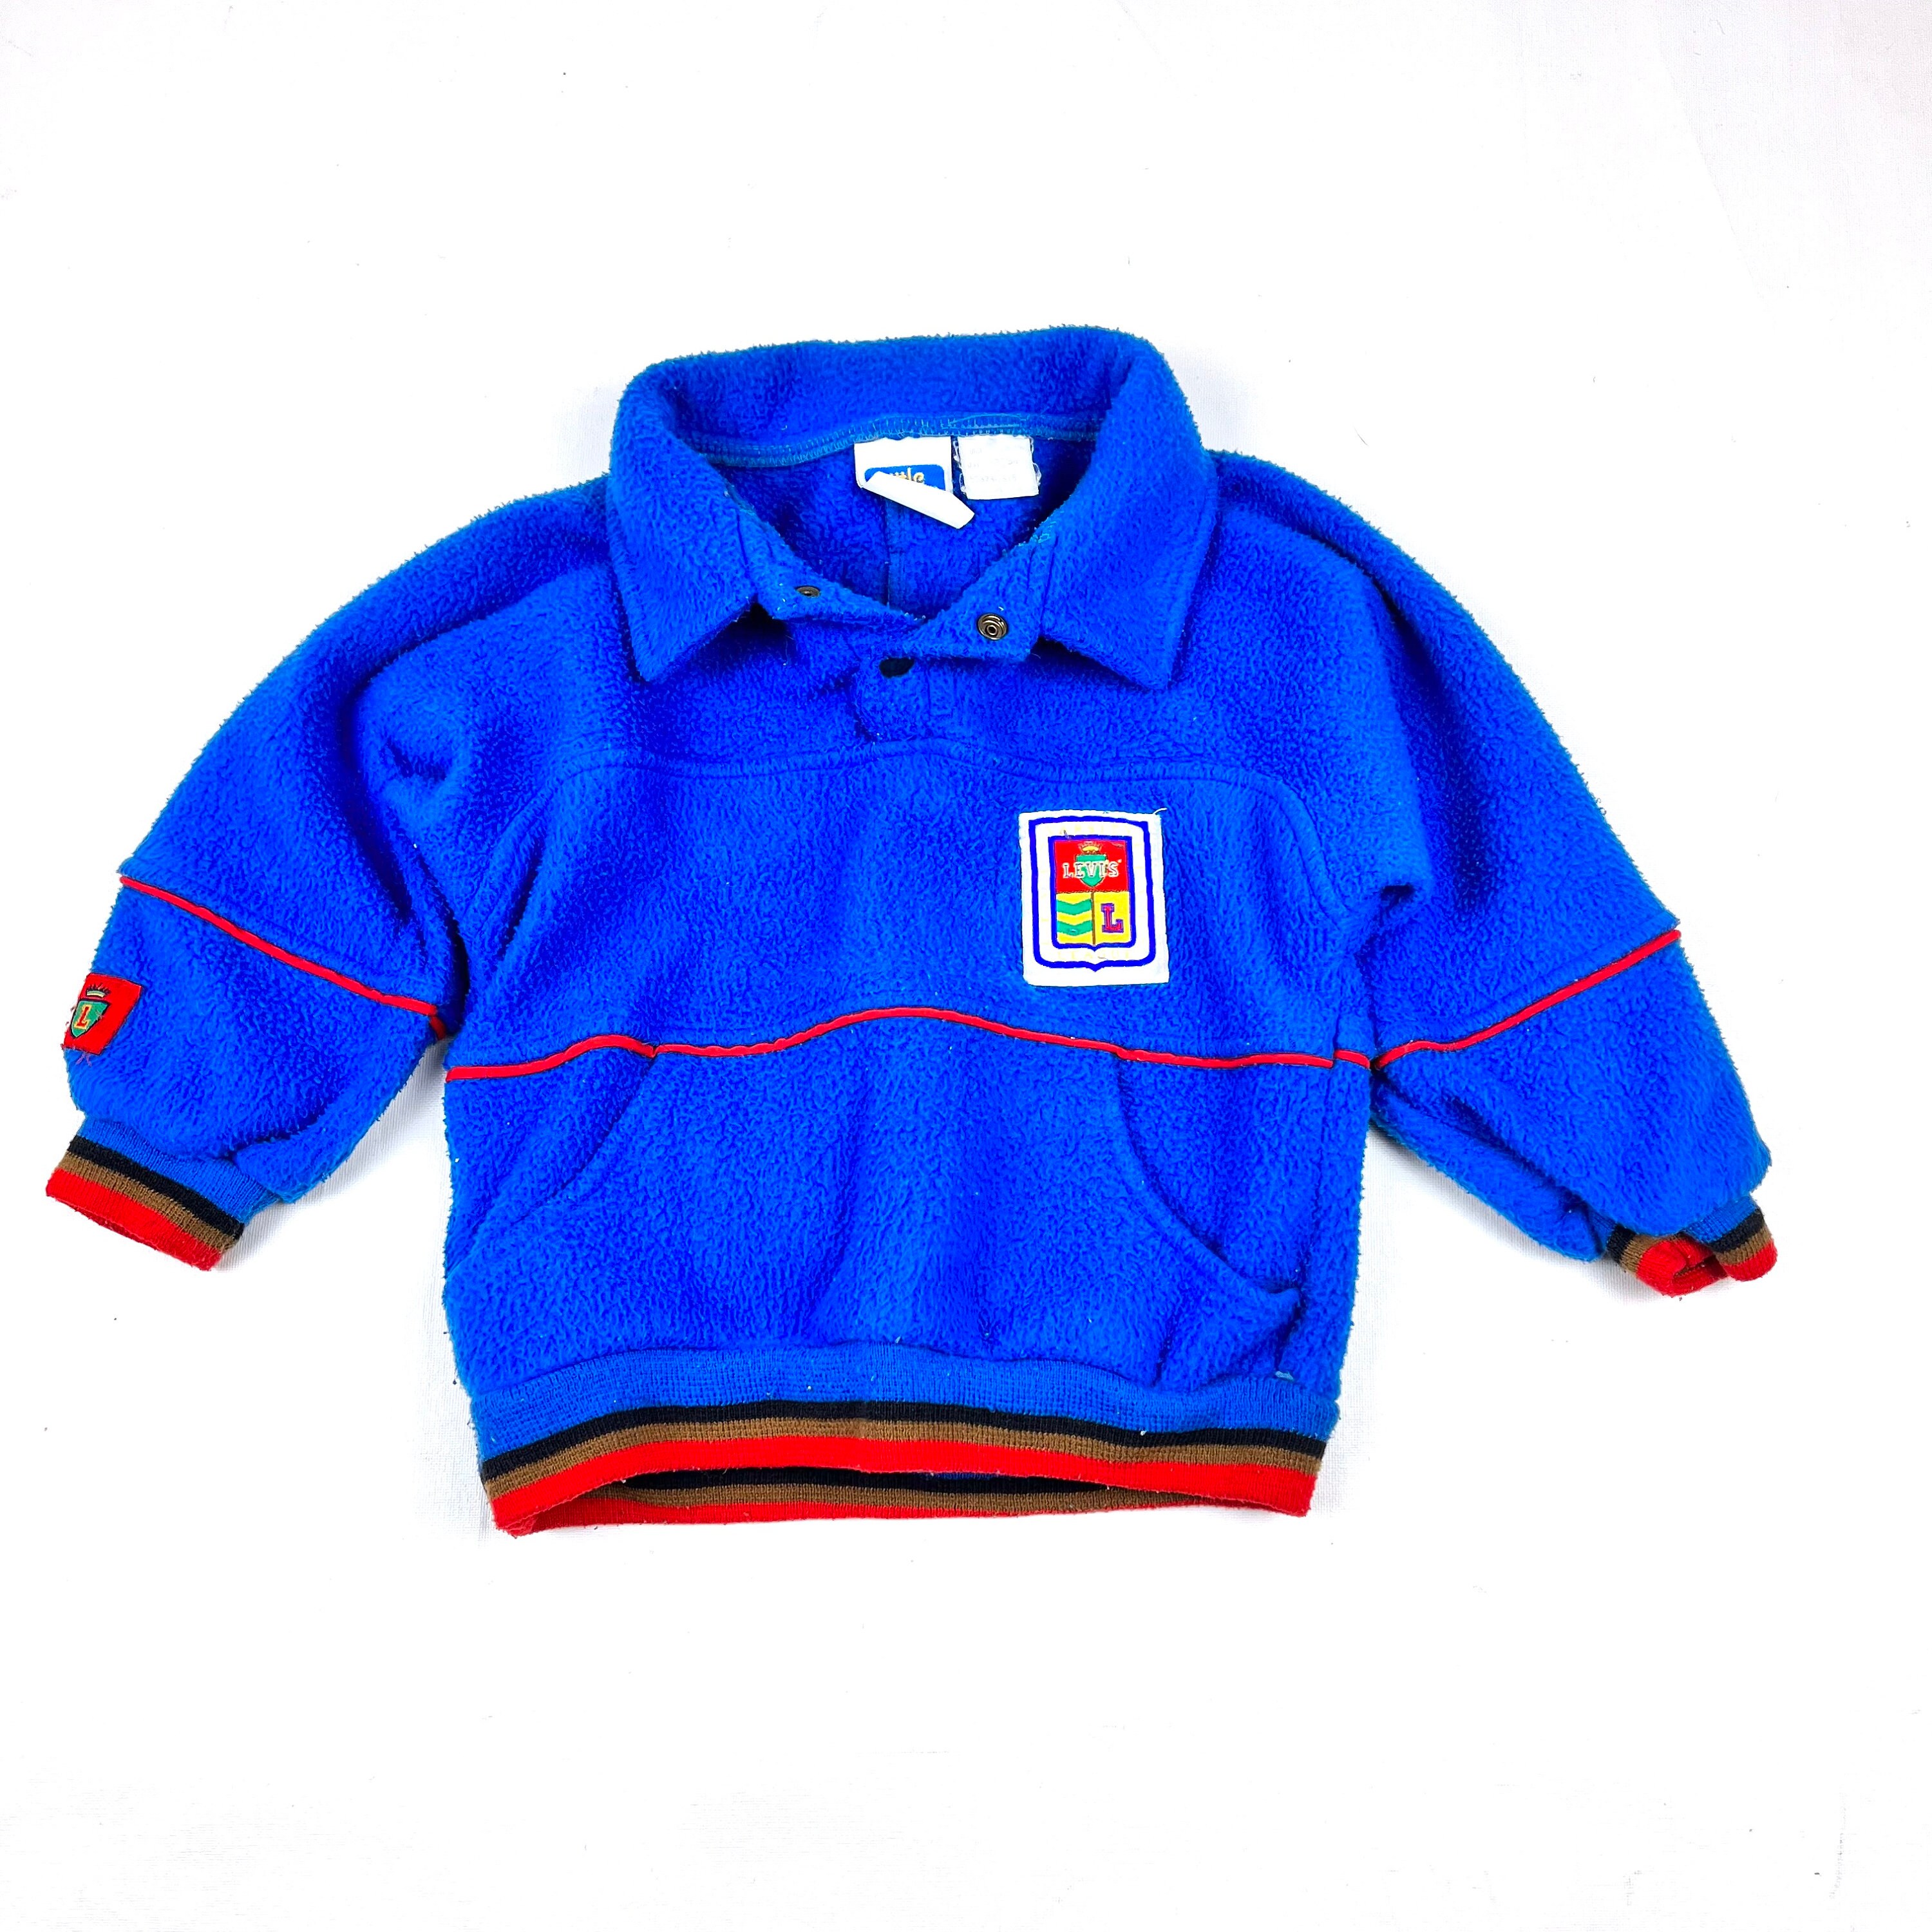 Vtg Levis fleece pullover, Vintage 80s kids Levi's blue fleece pullover  sweater, Little Levis jeans, Size 3/4Y